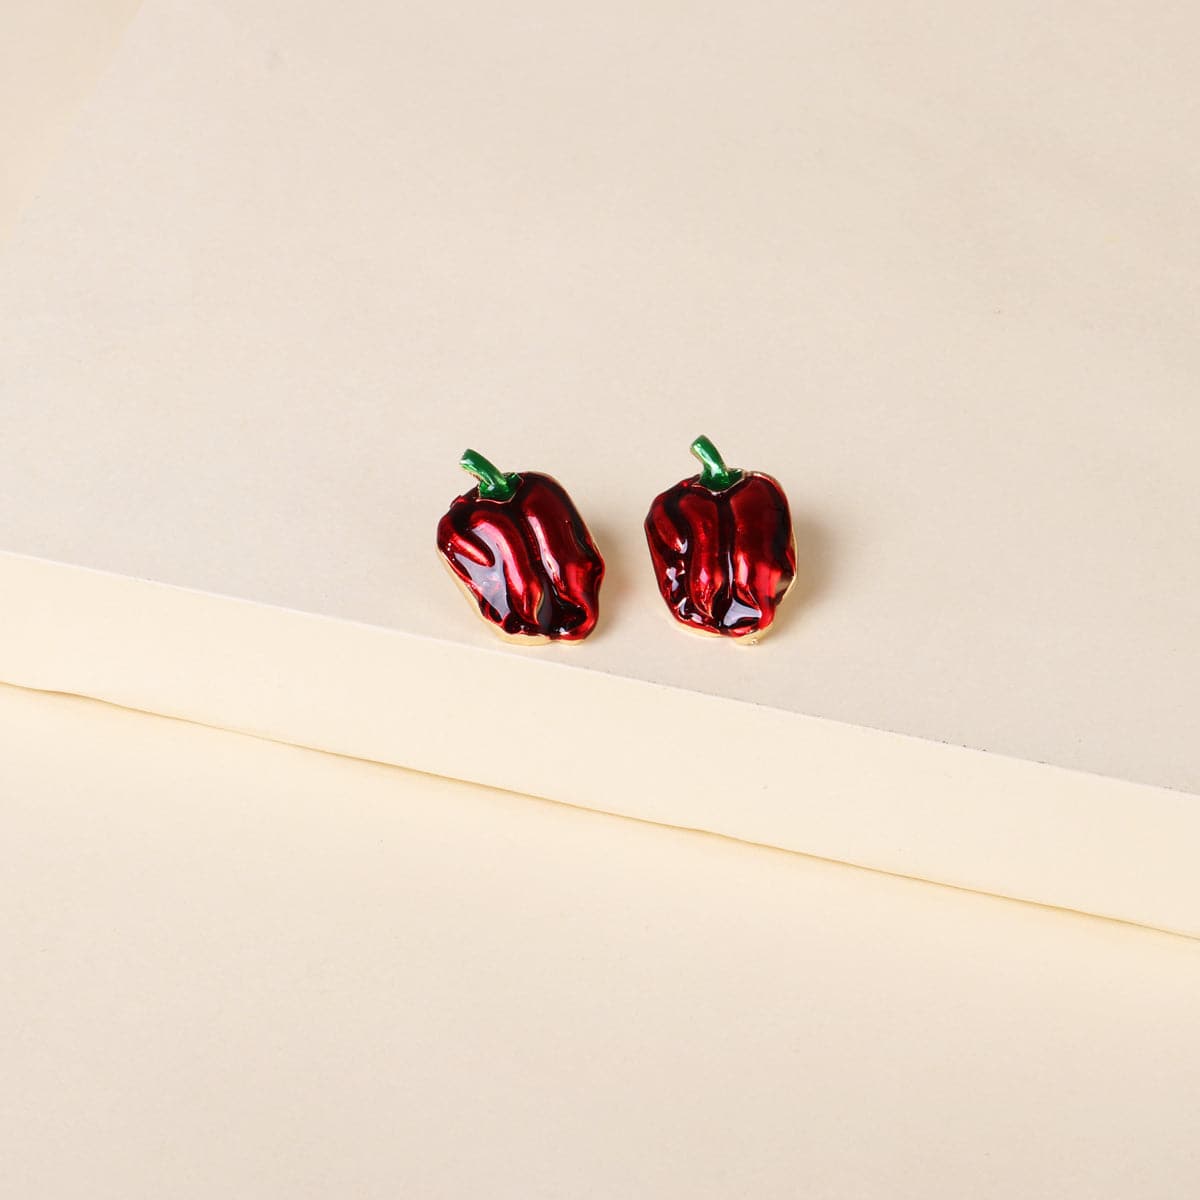 Red Pepper Stud Earrings